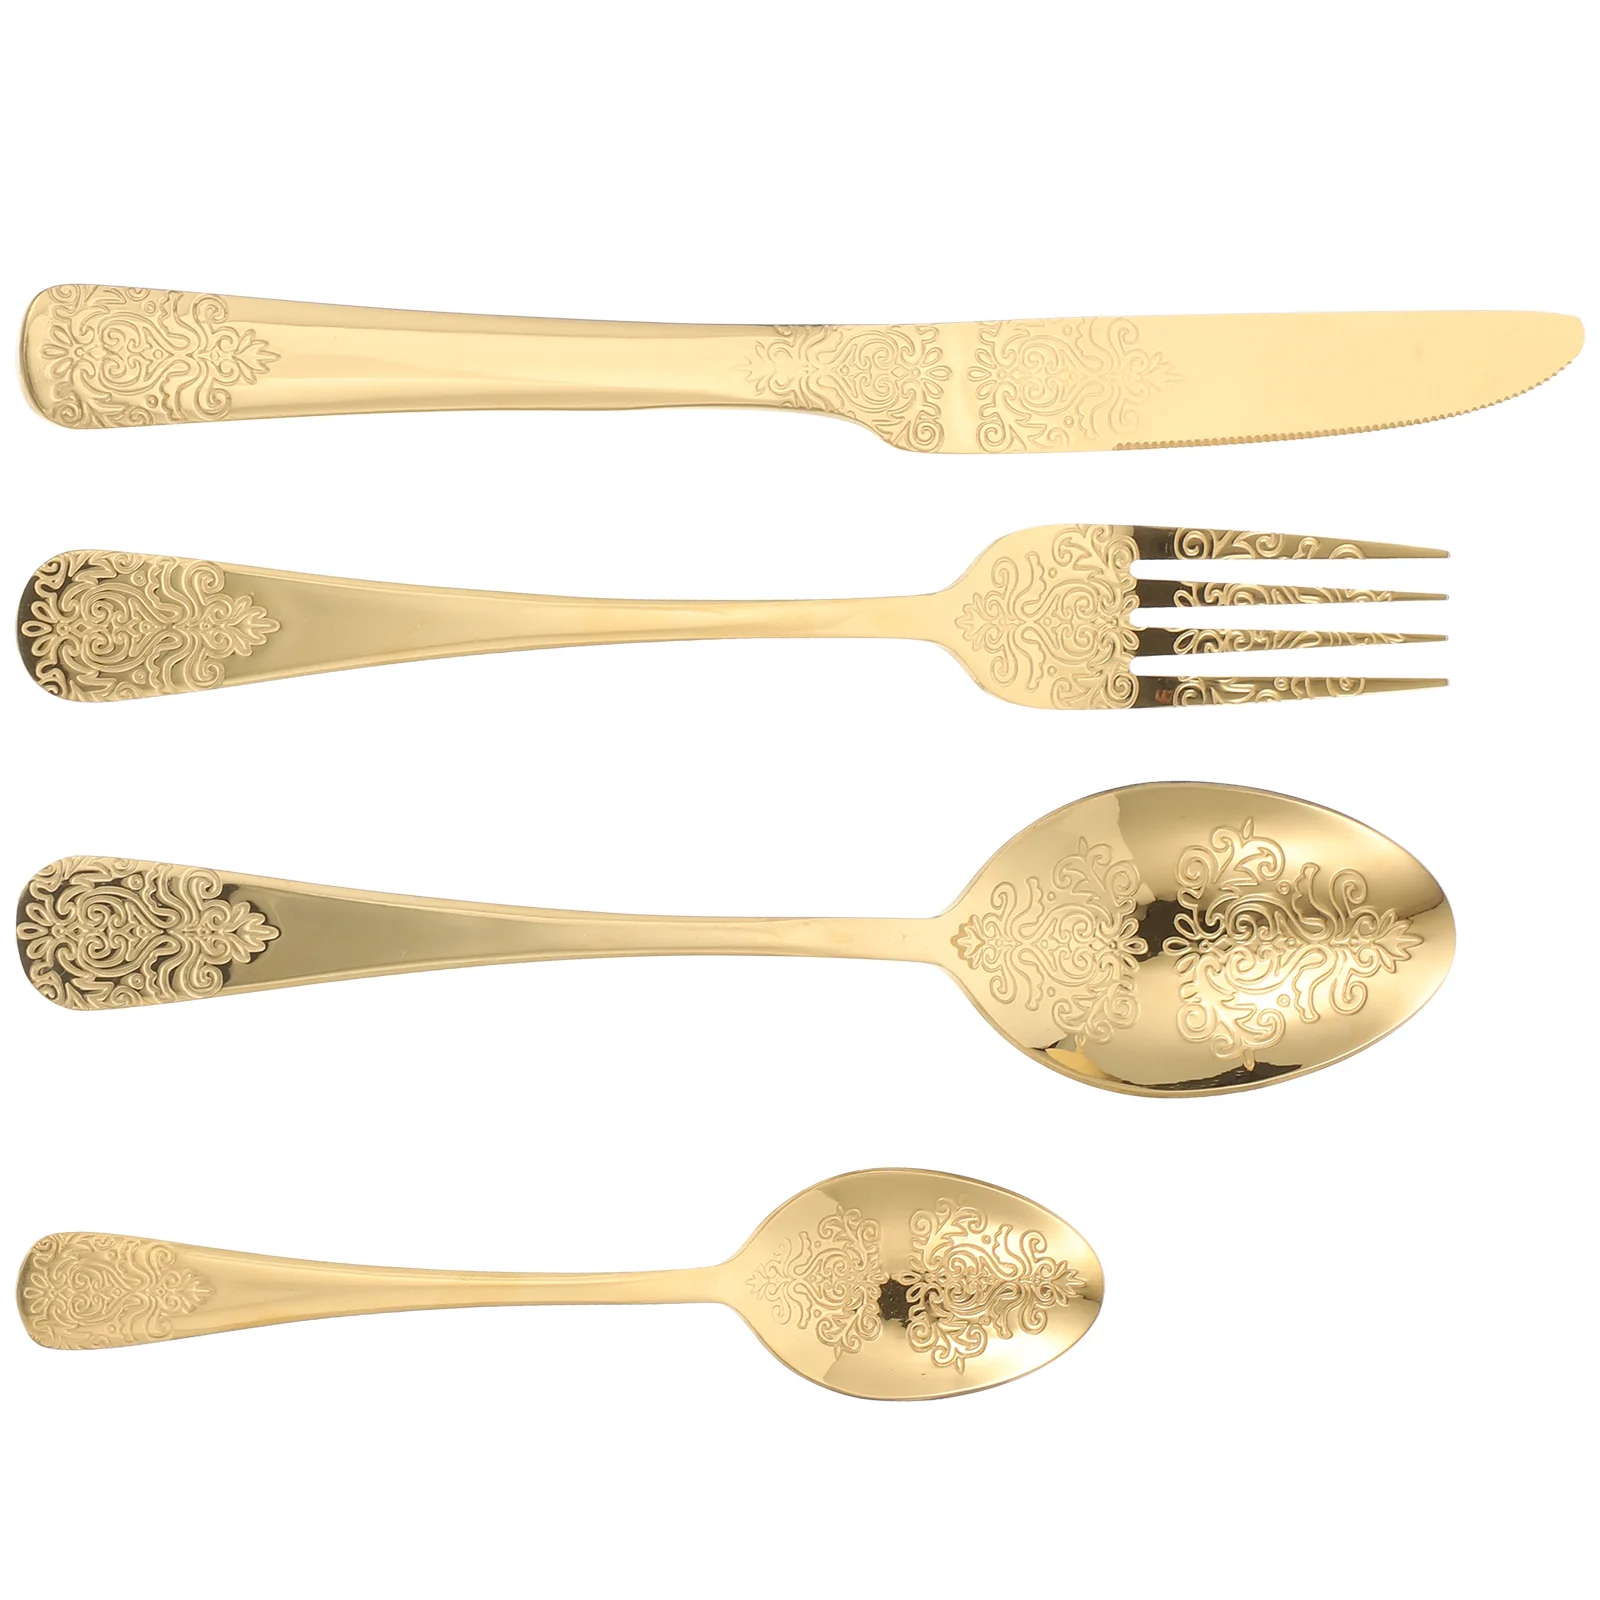 

Set Spoon Gold Flatware Utensils Fork Salad Serving Tableware Wedding Dessert Butter Steel Cutlery Golden Silverware Stainless